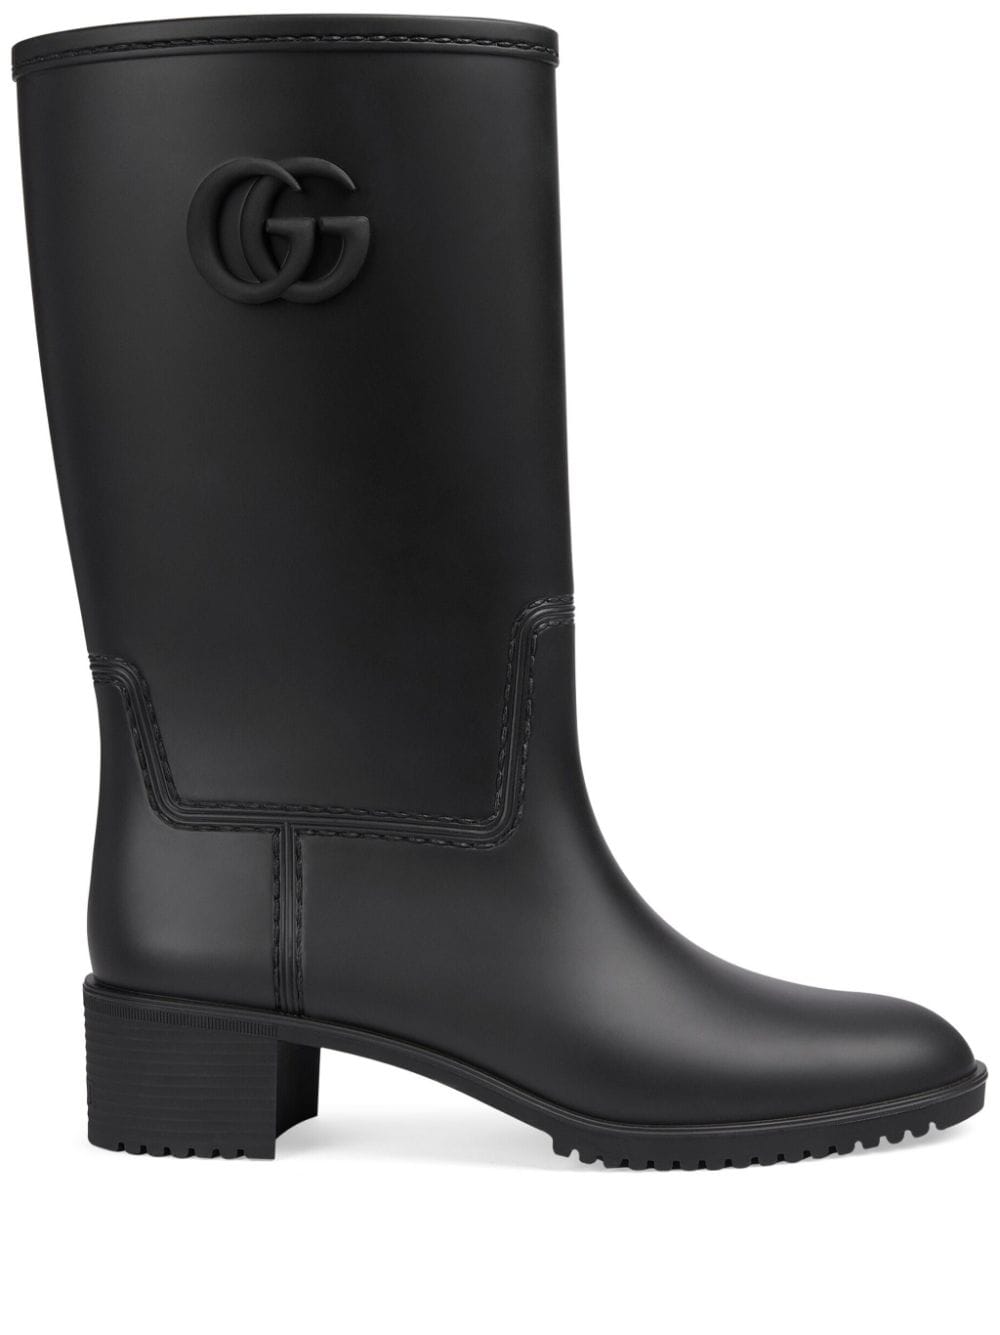 Gucci Women's Black Double G Leather Rain Boots